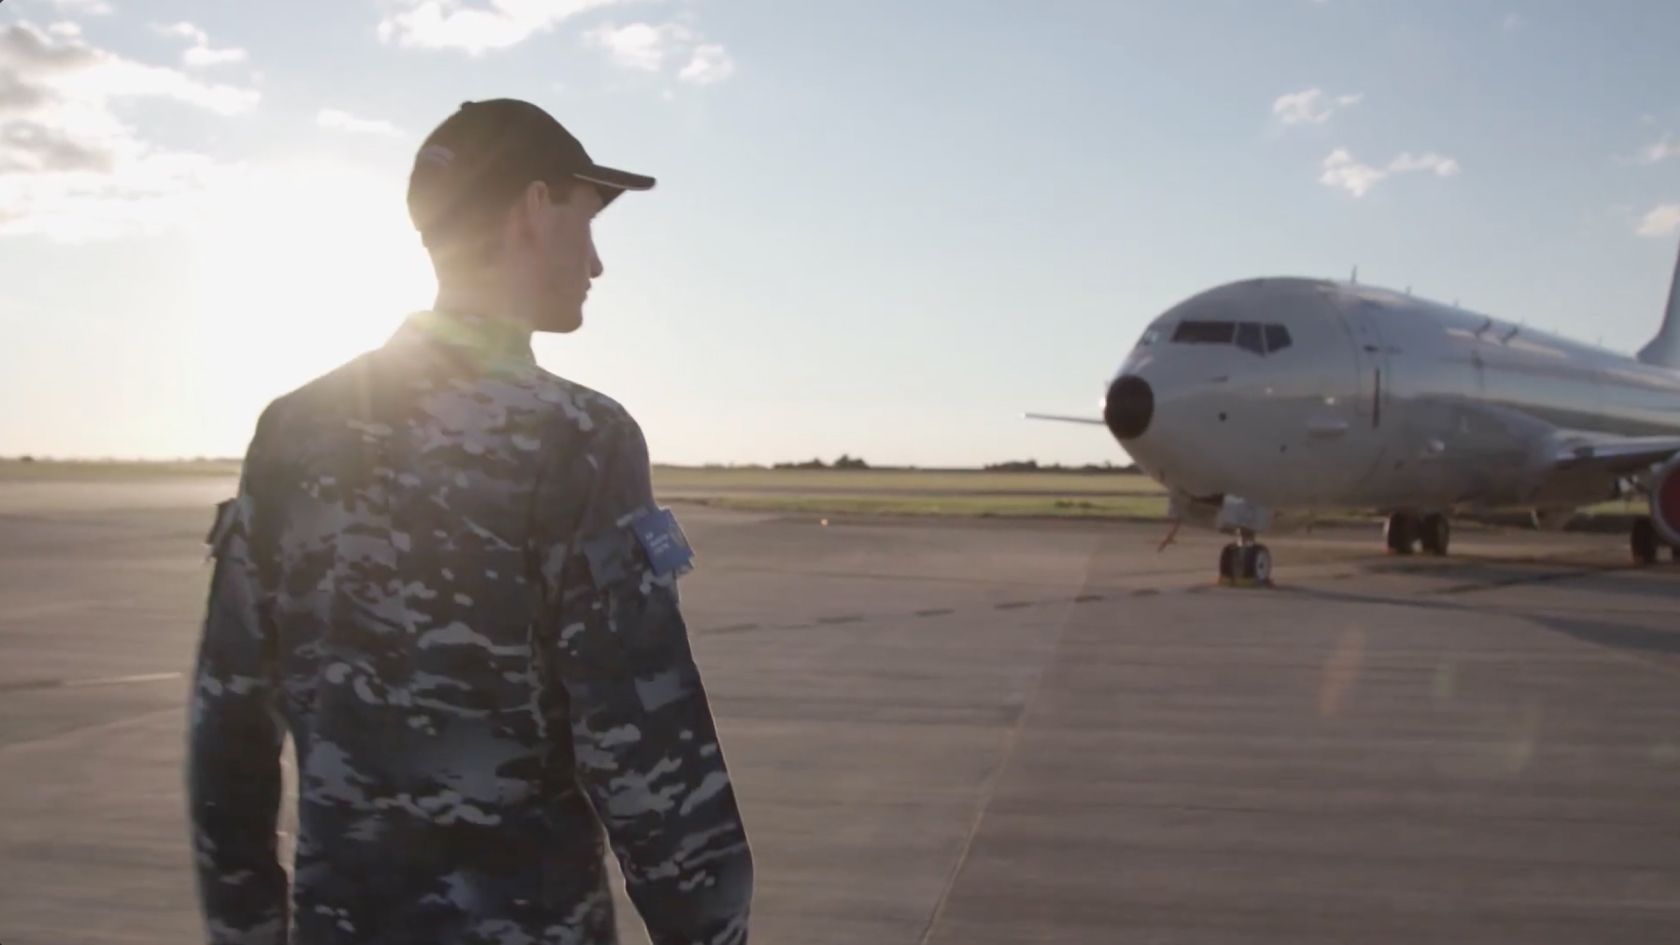 An Air Force member walking towards an airplane.